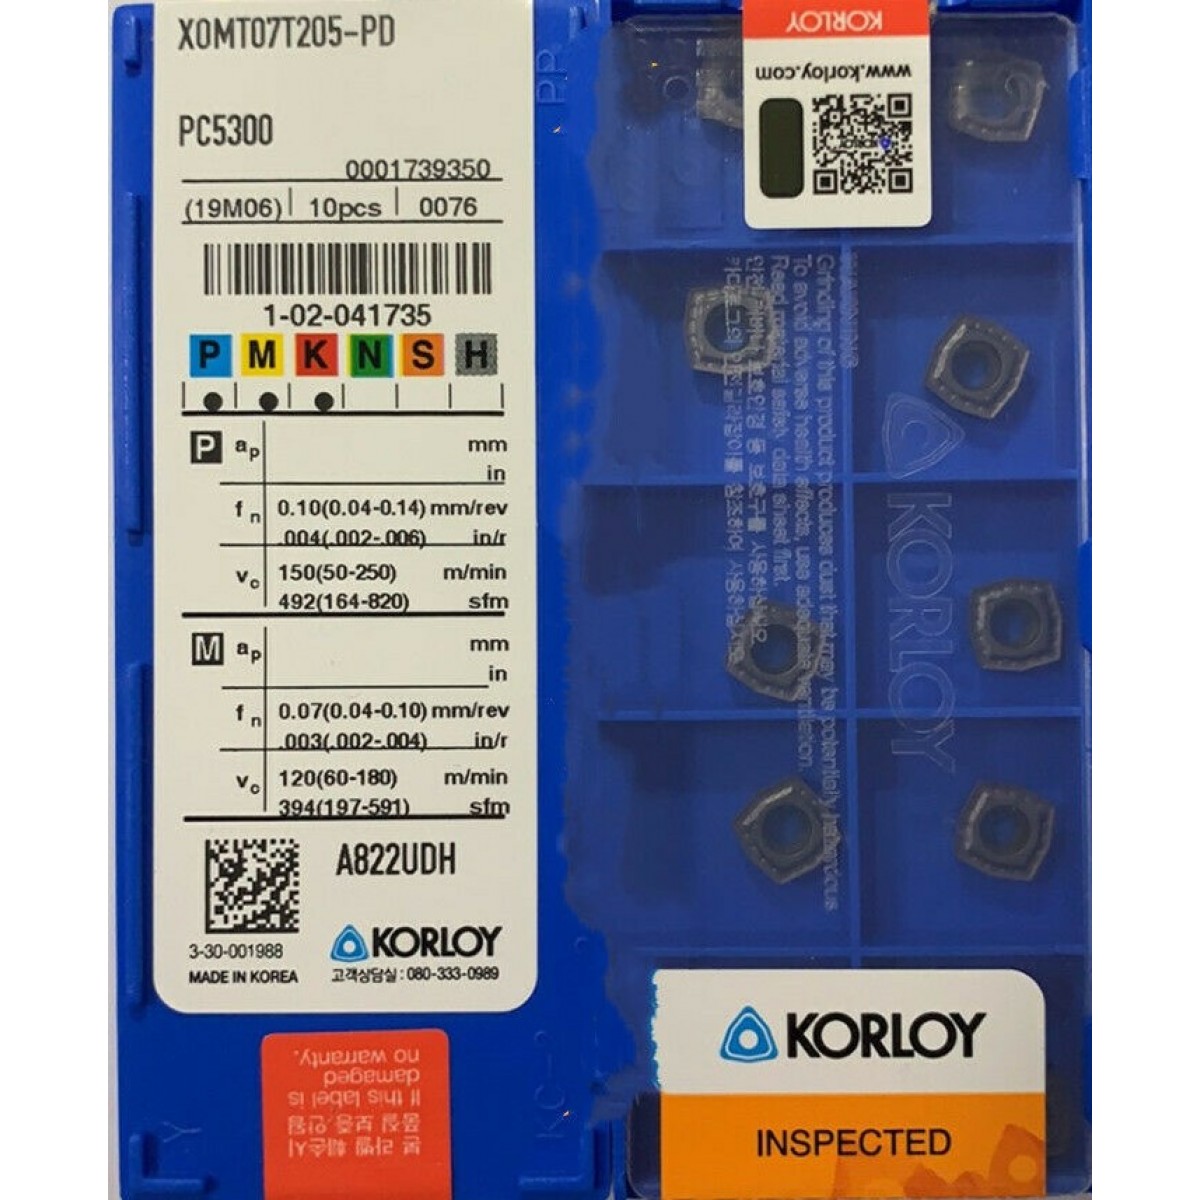 KORLOY - XOMT07T205-PD PC5300